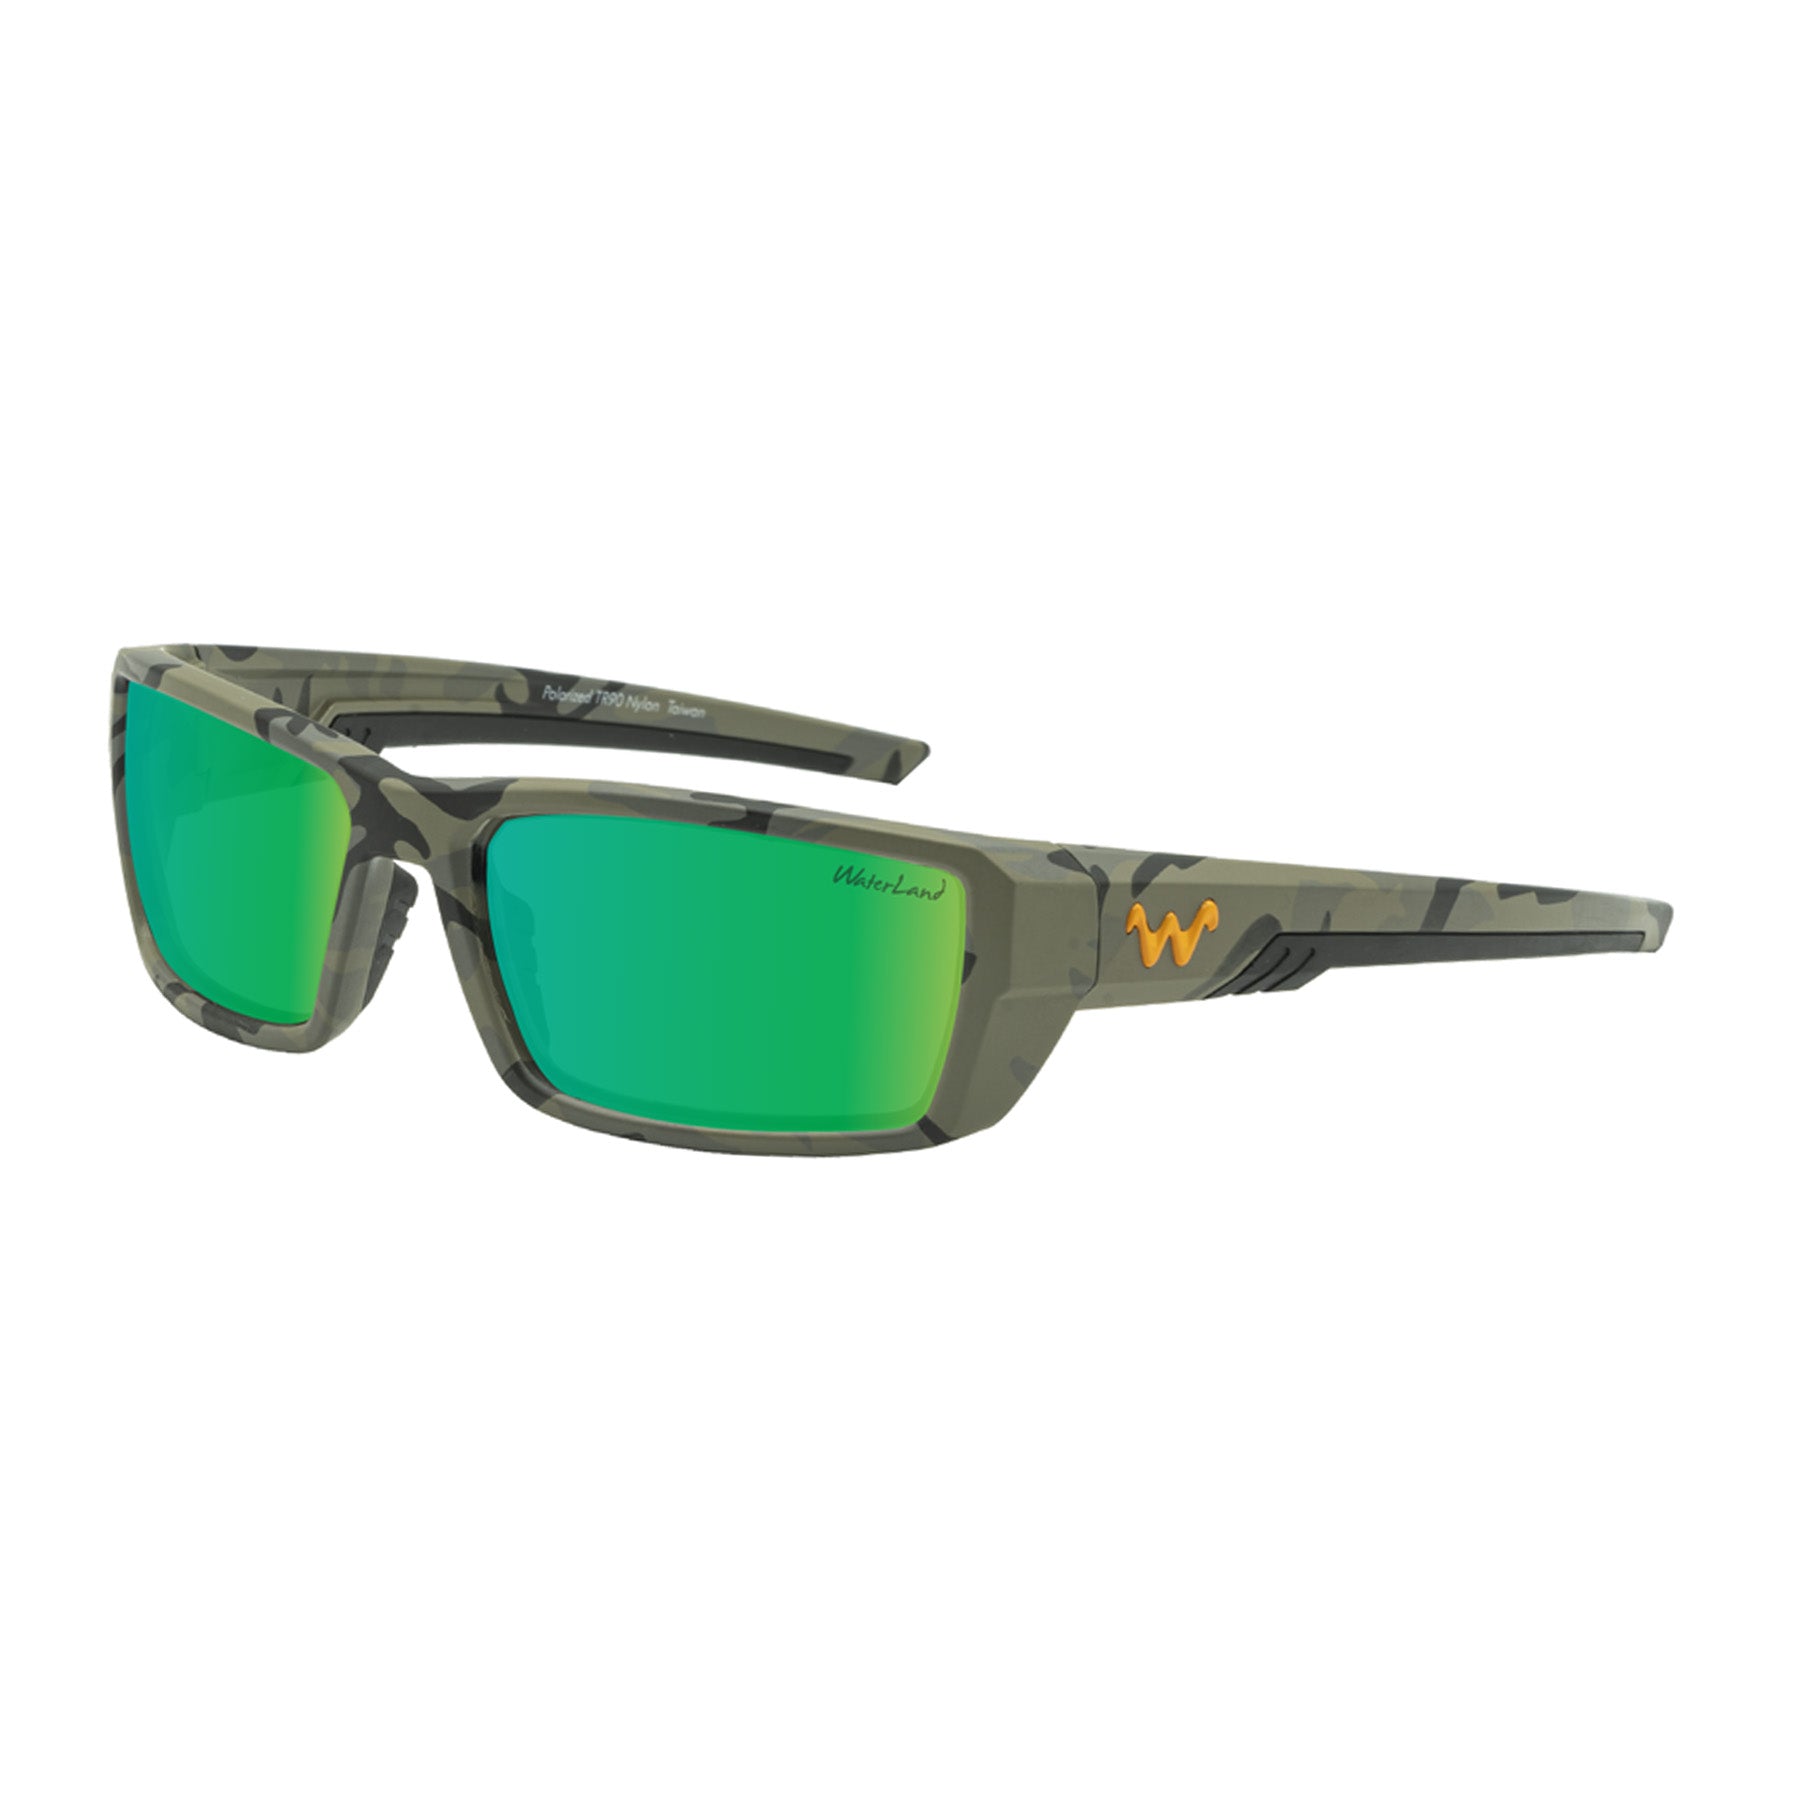 WaterLand Polarized Sunglasses - Ashor Series - Ops Camo